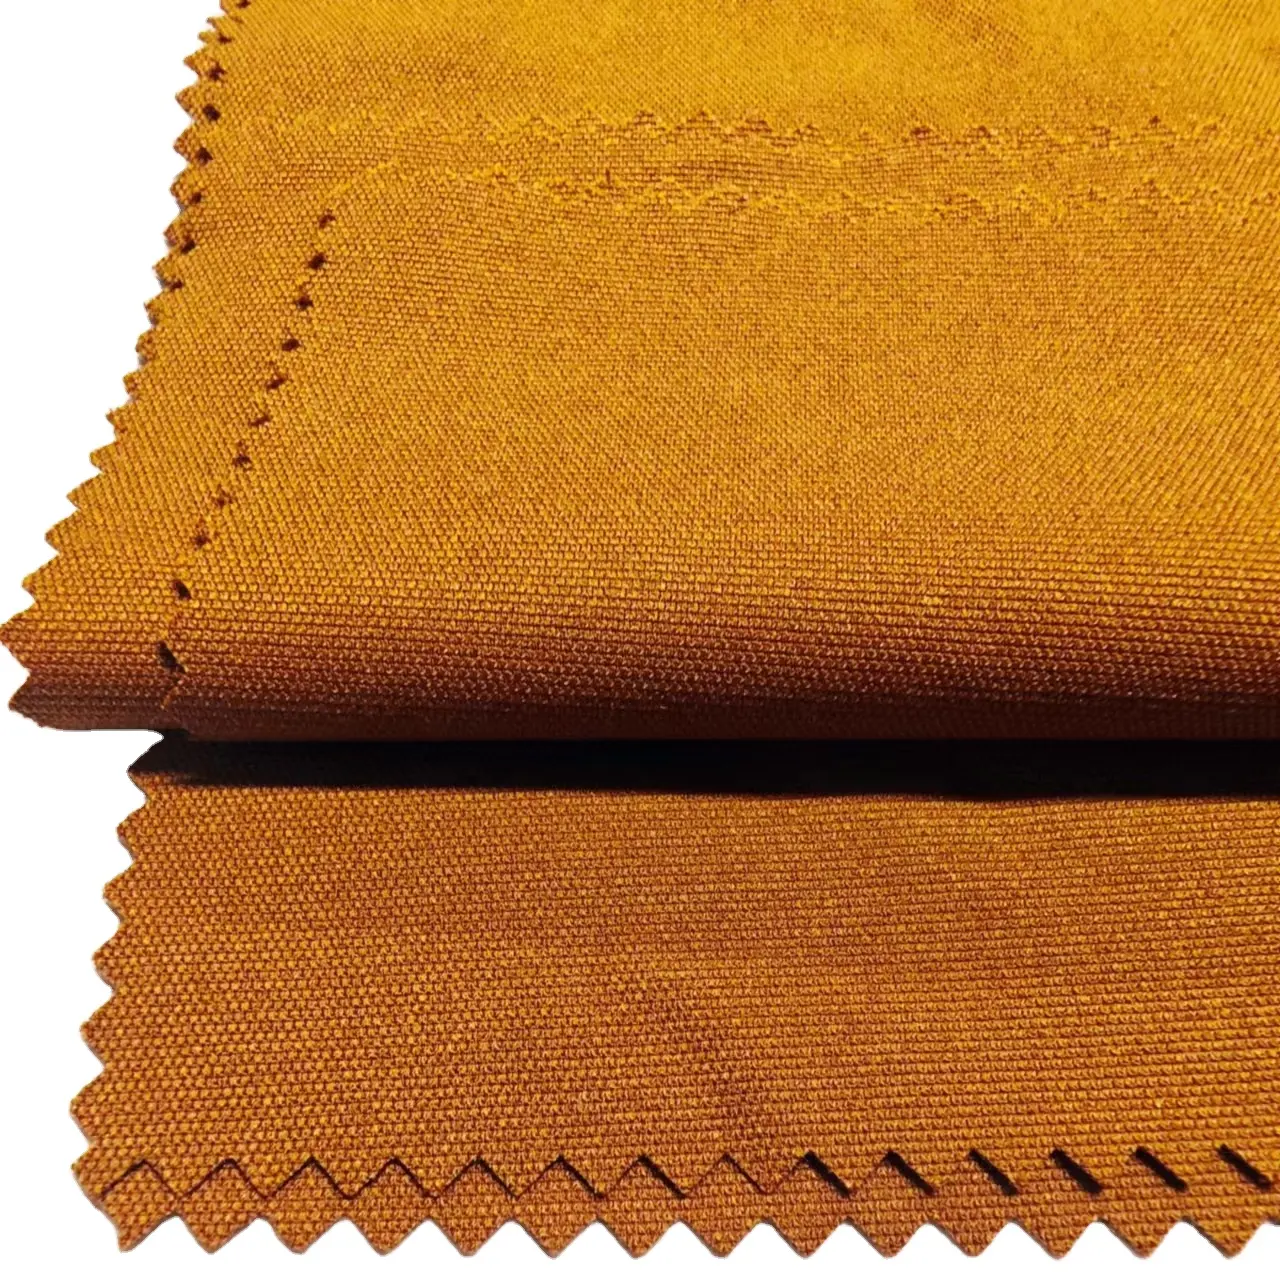 63% polyamide 24% modal 3% silk 10% elastane nylon silk spandex fabric modal blended fabric 4 way spandex fabric